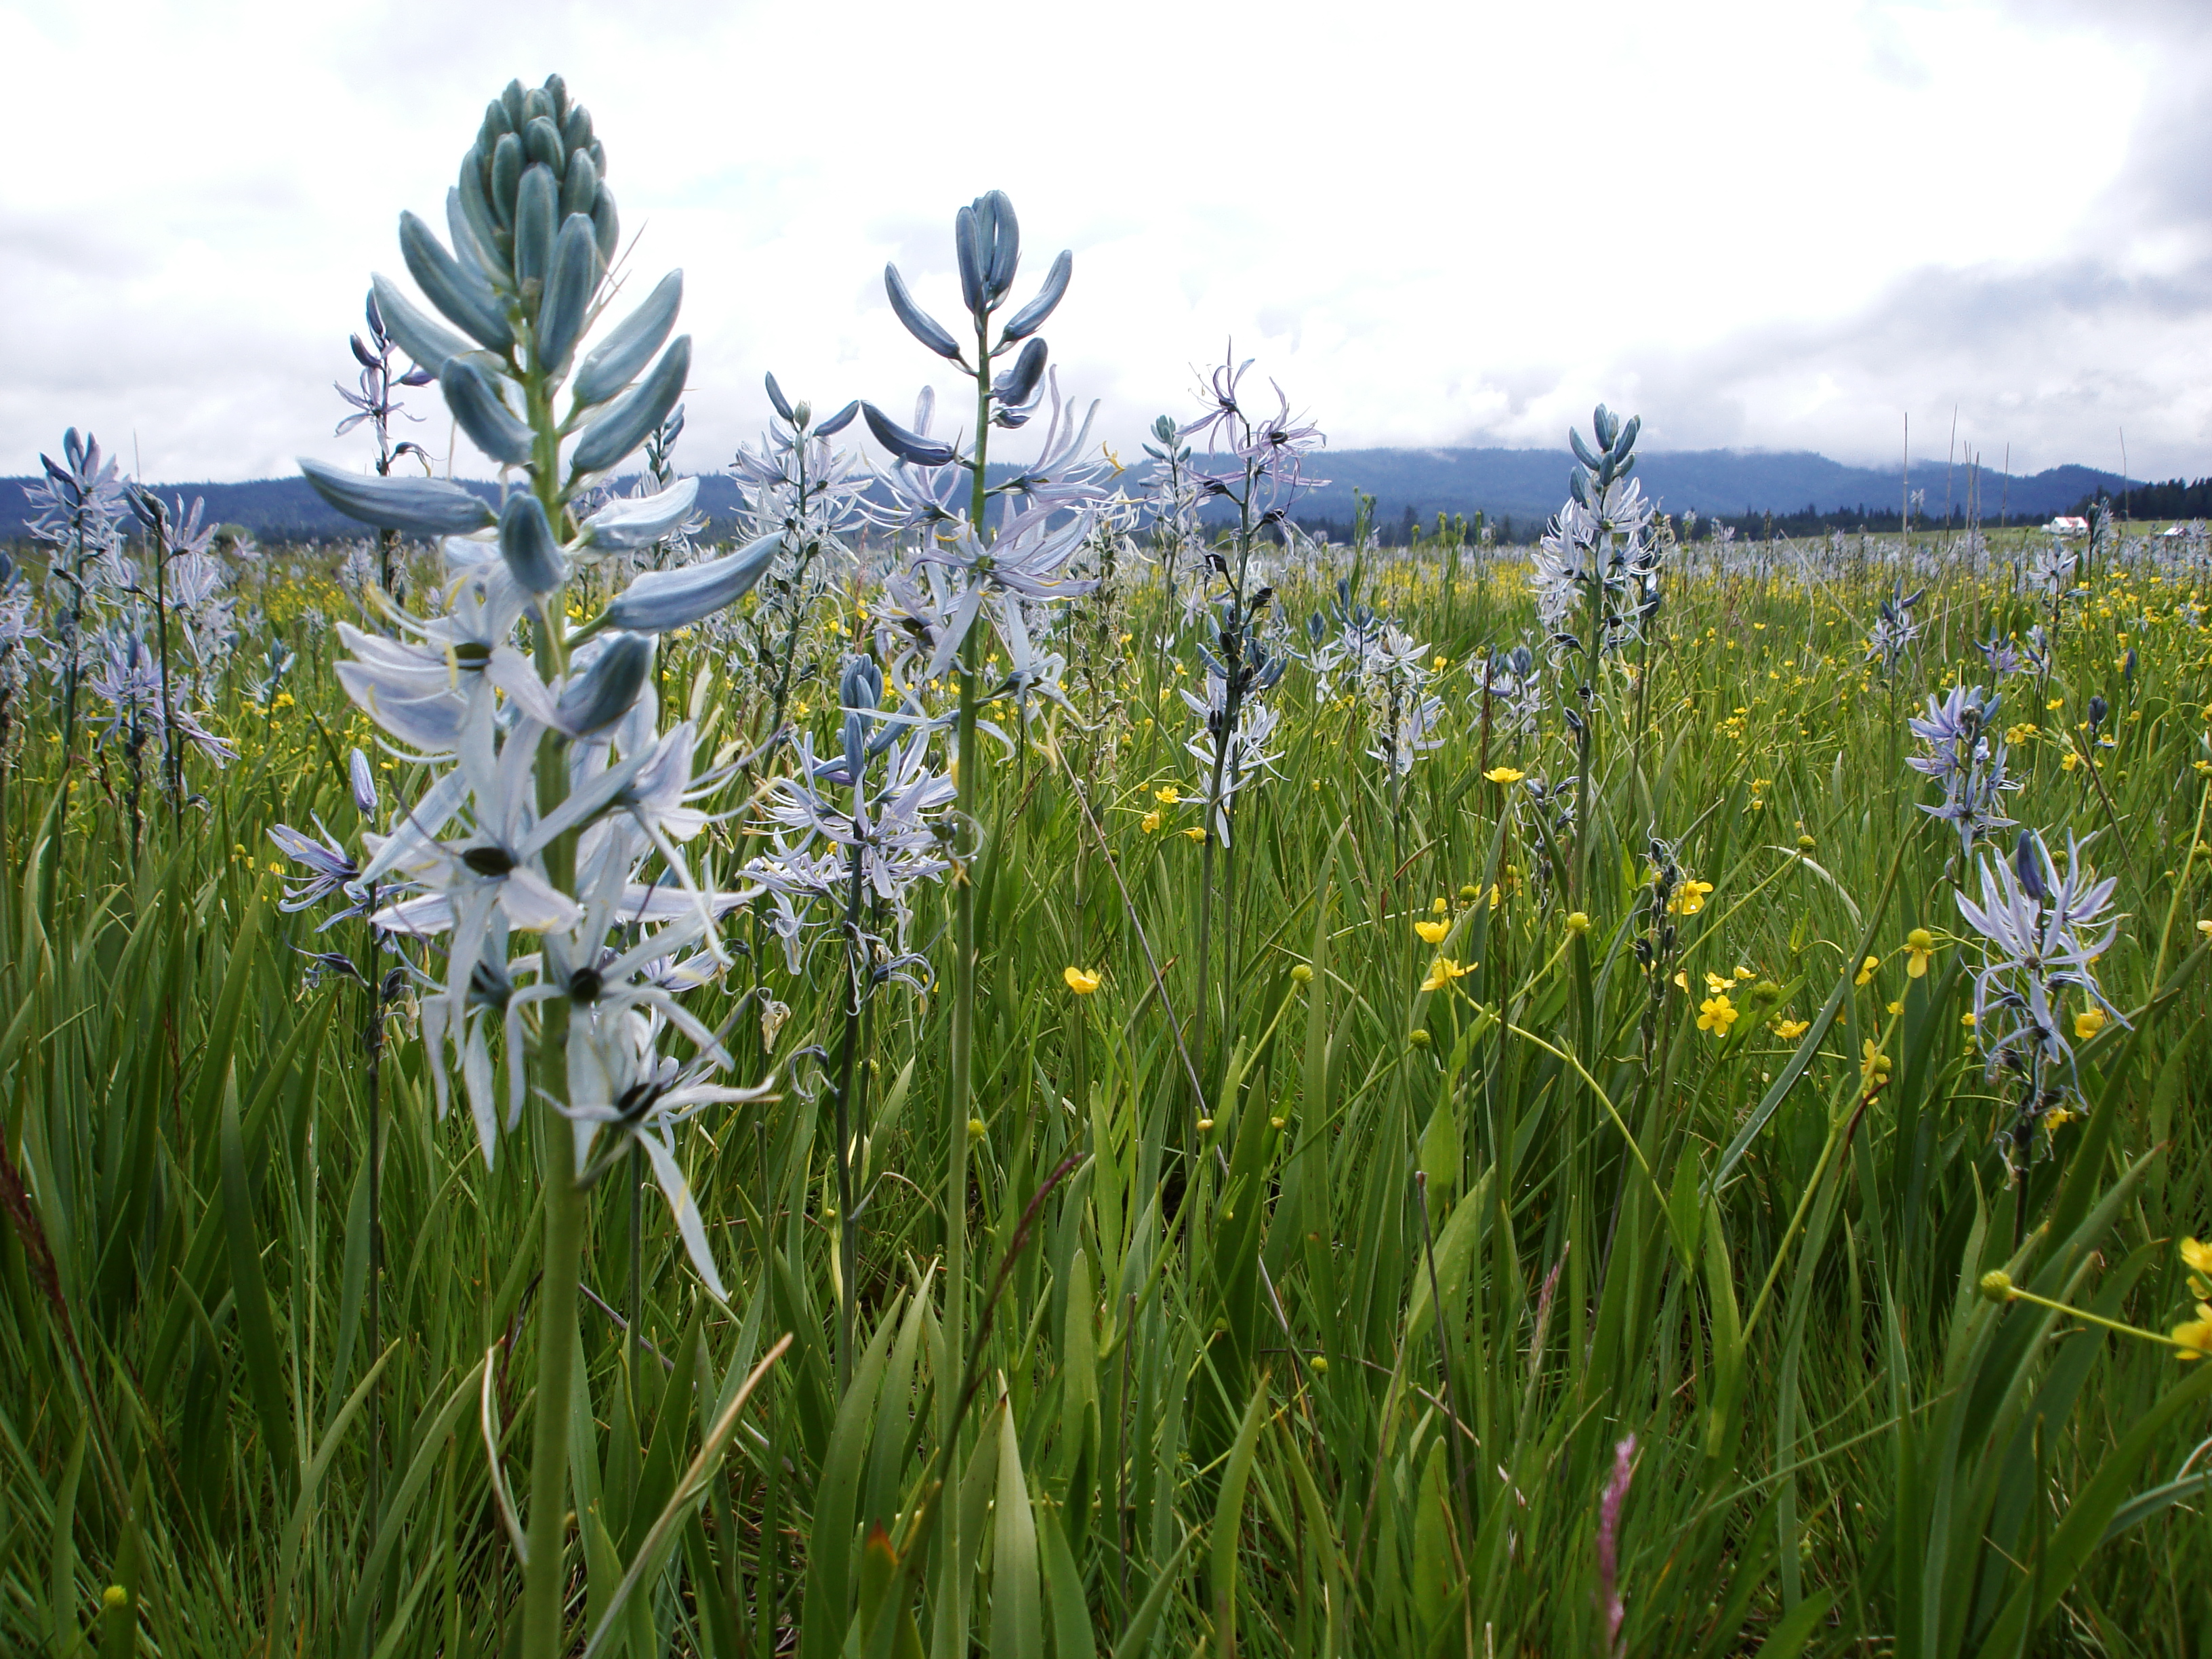 Blue Camas flowers in a prairie field.